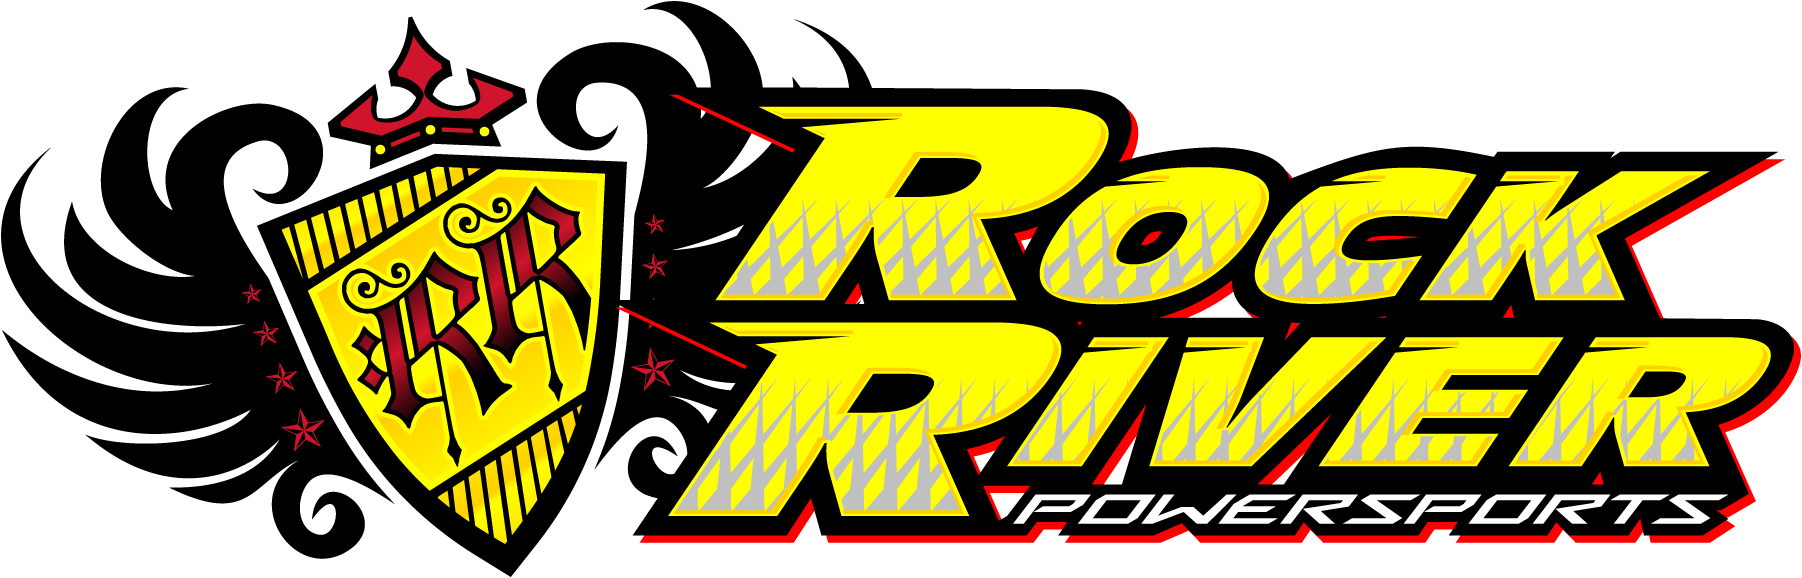 Rock River Power Sports Inc.